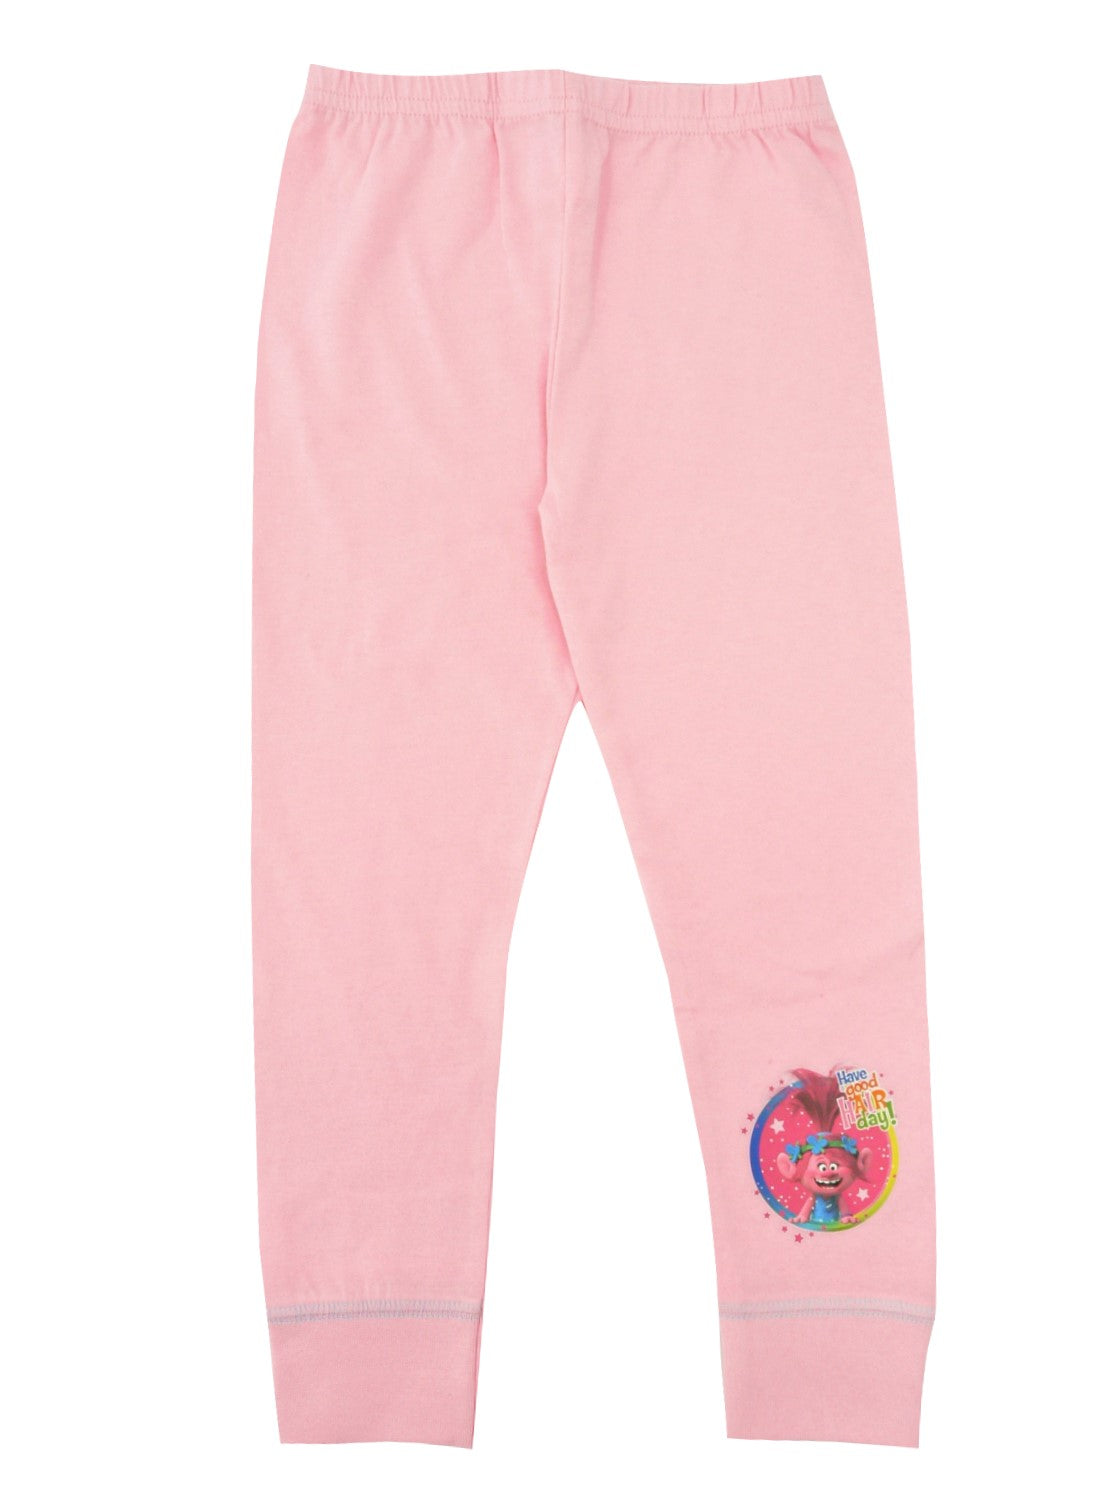 Trolls "Hair We Go" Girls Pink Pyjamas 4-10 Years Available